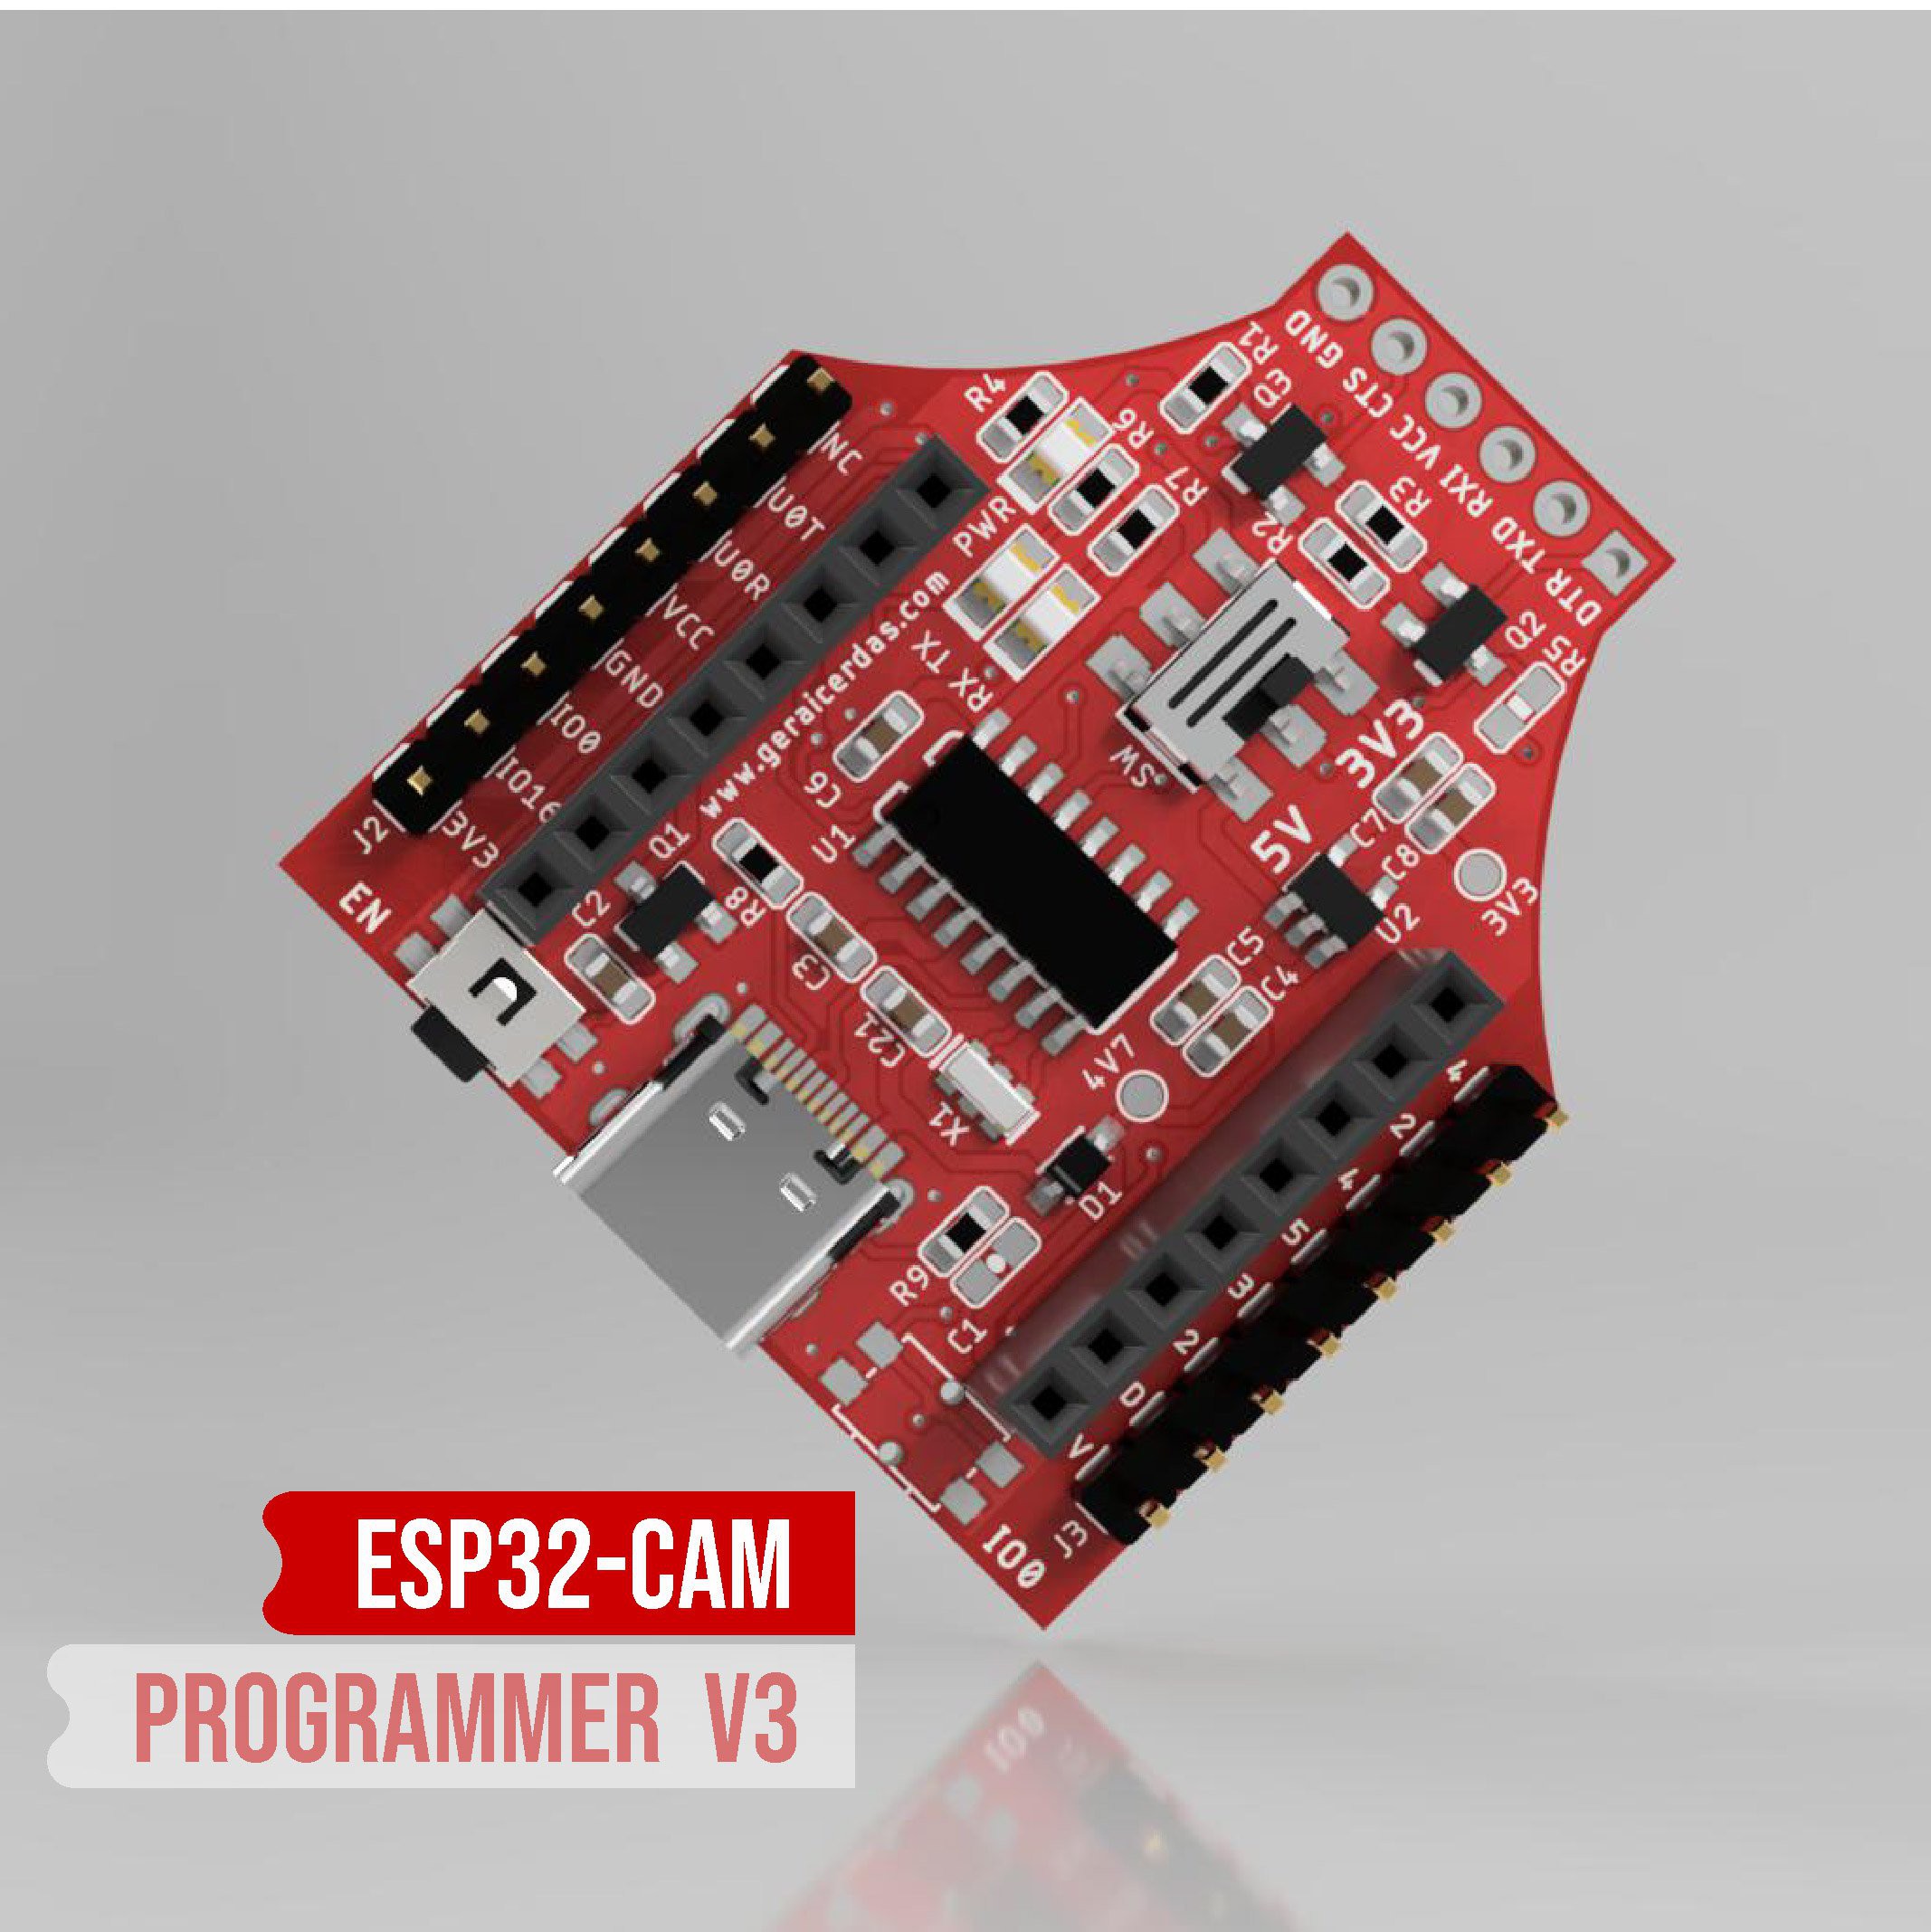 Gallery Esp32 Cam Programmer